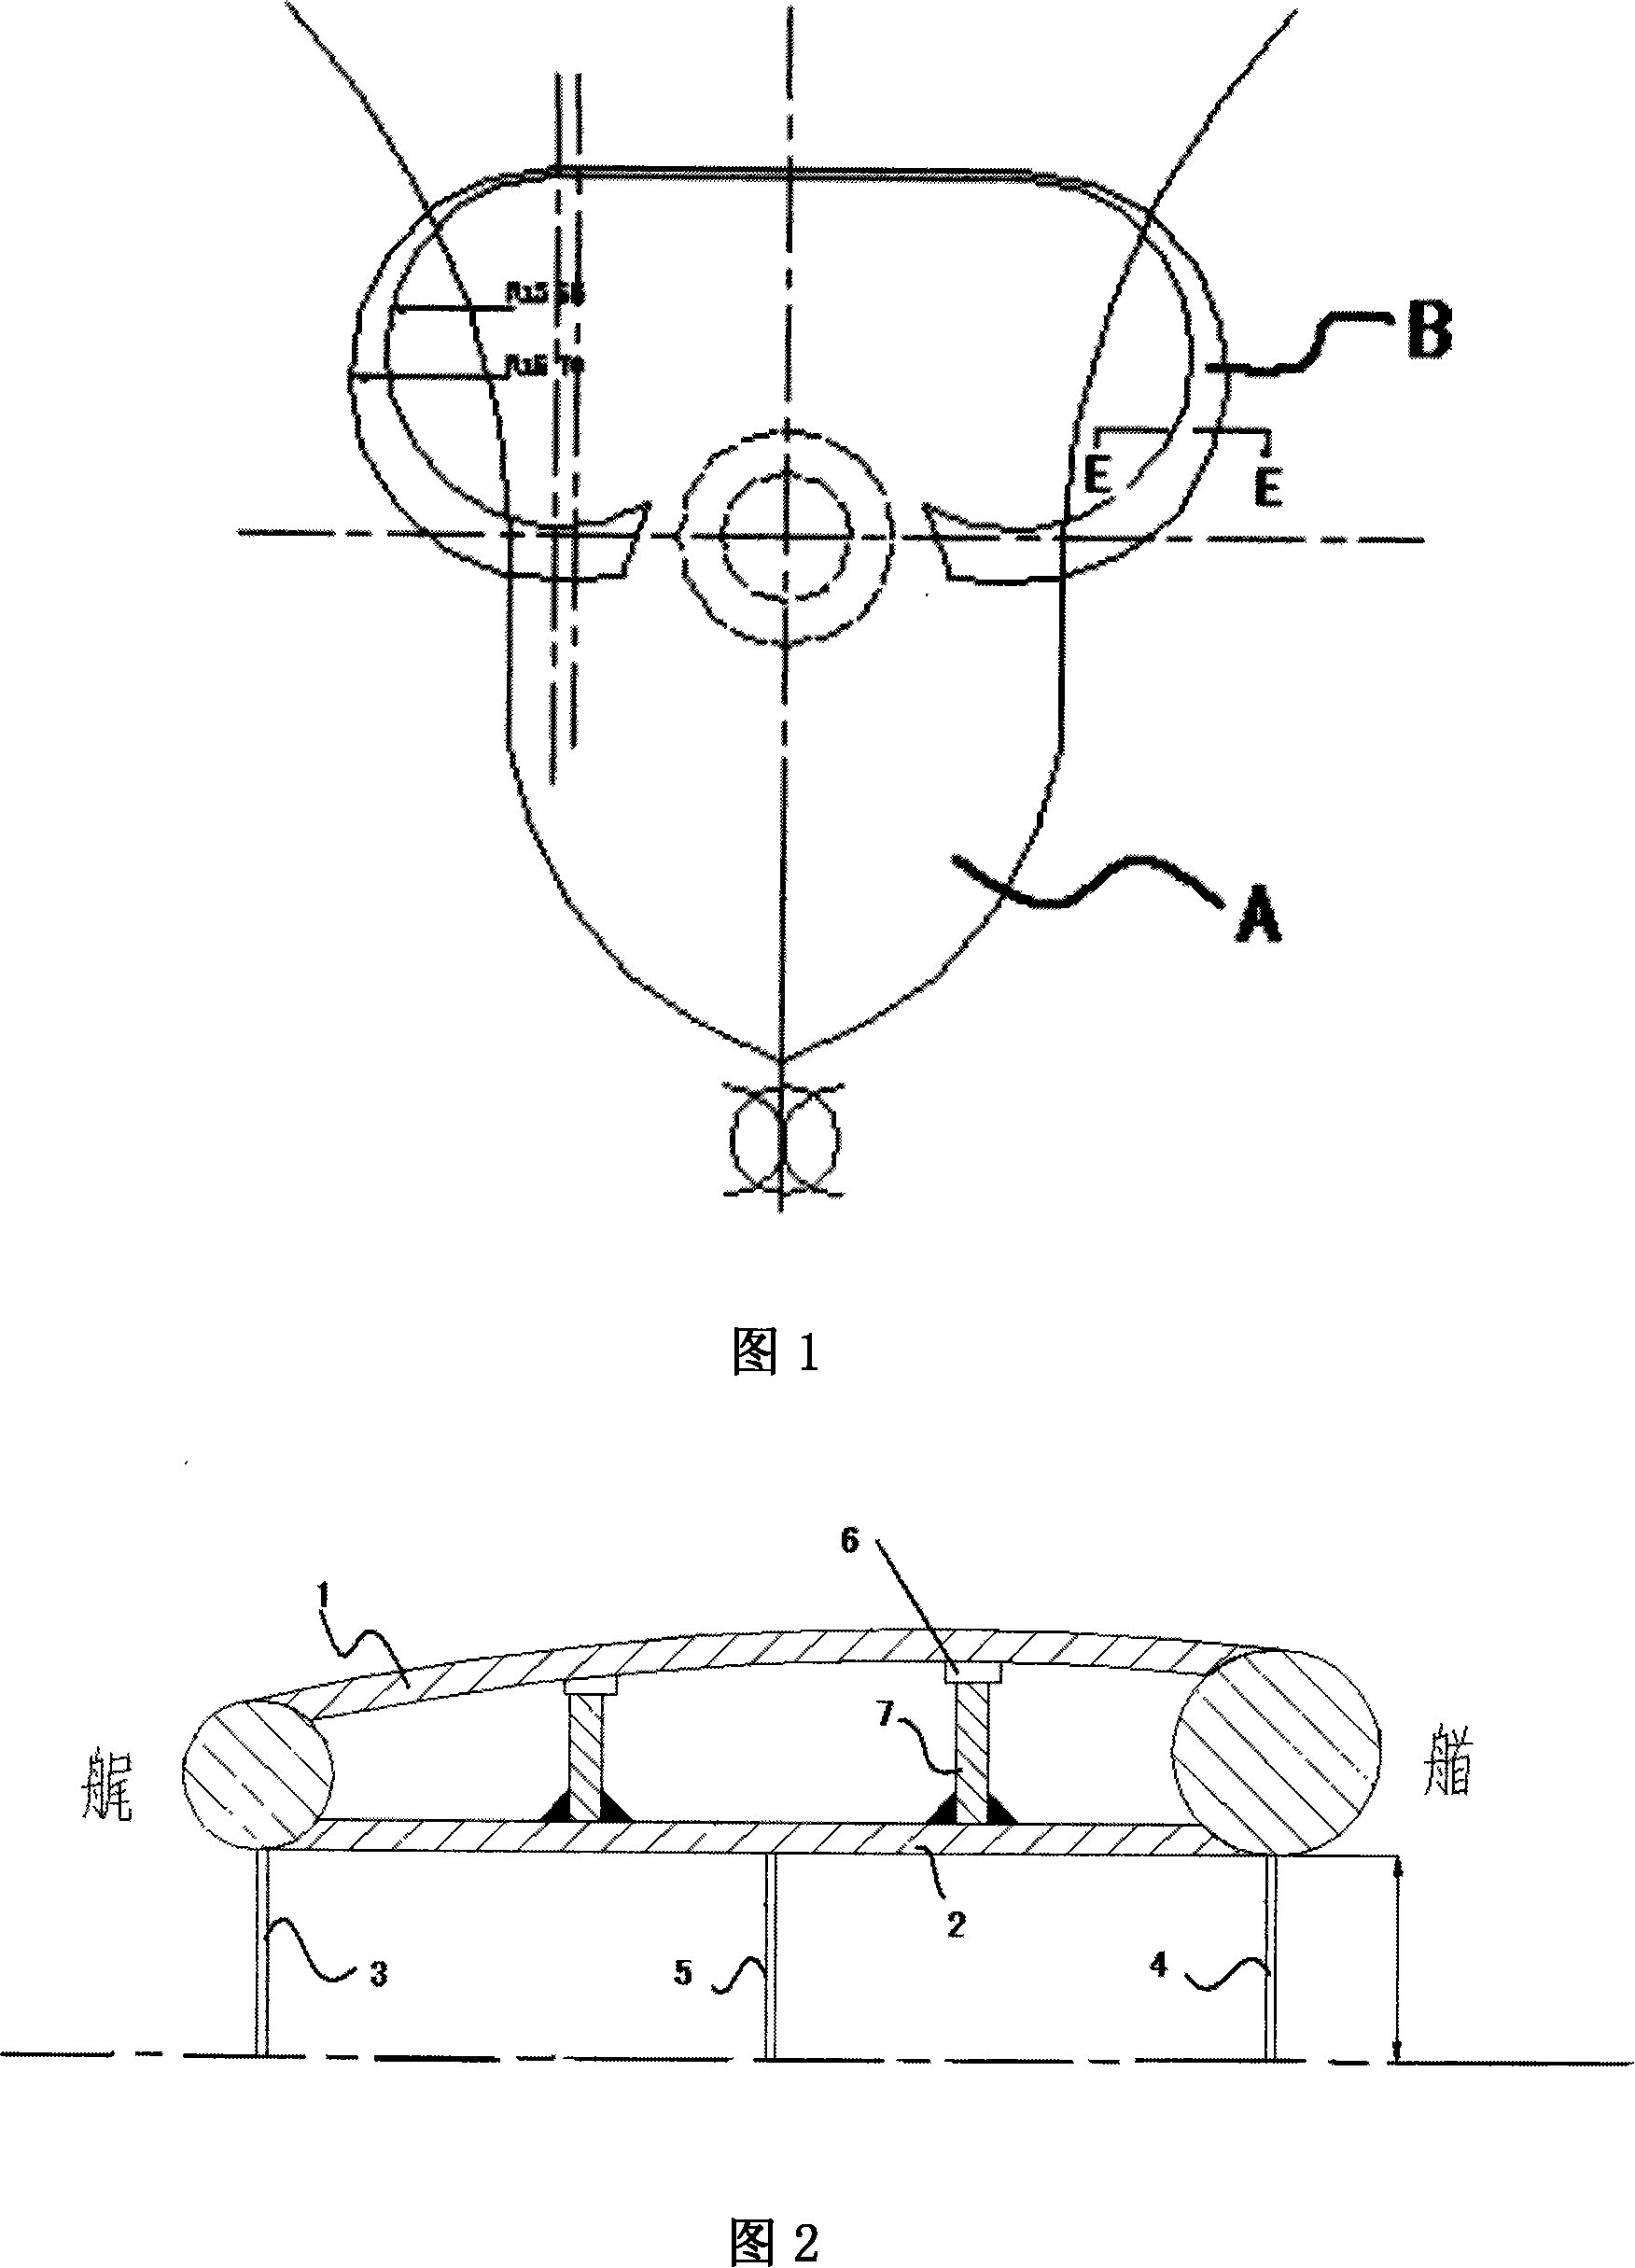 Method for manufacturing watercraft commutation tube